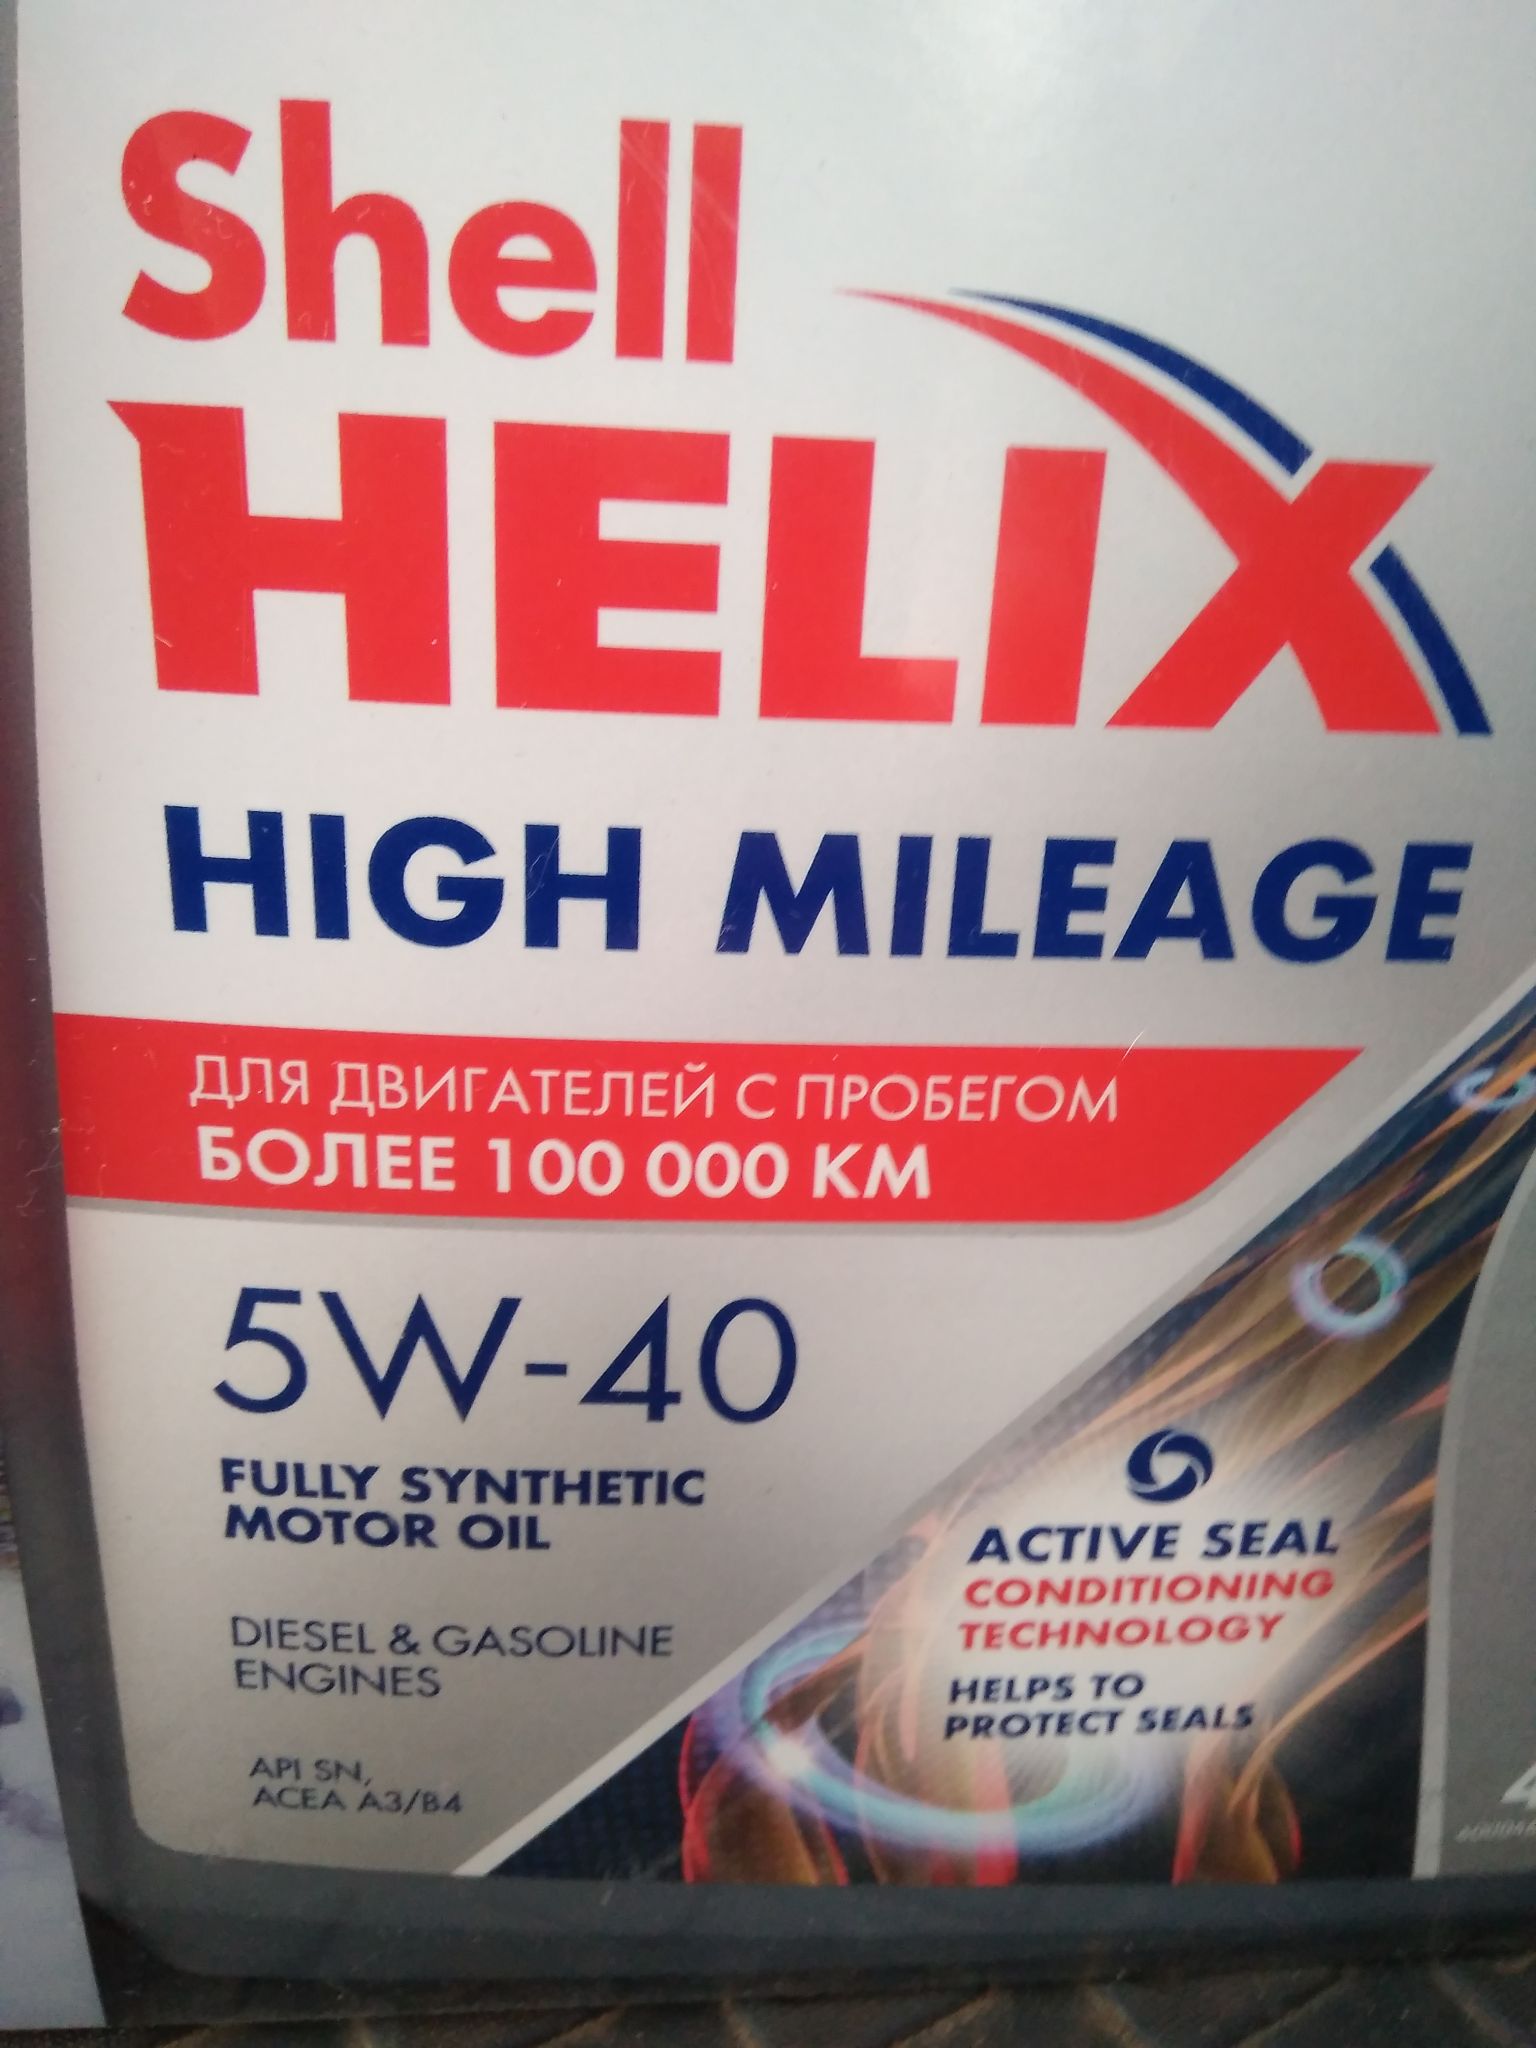 Helix high mileage